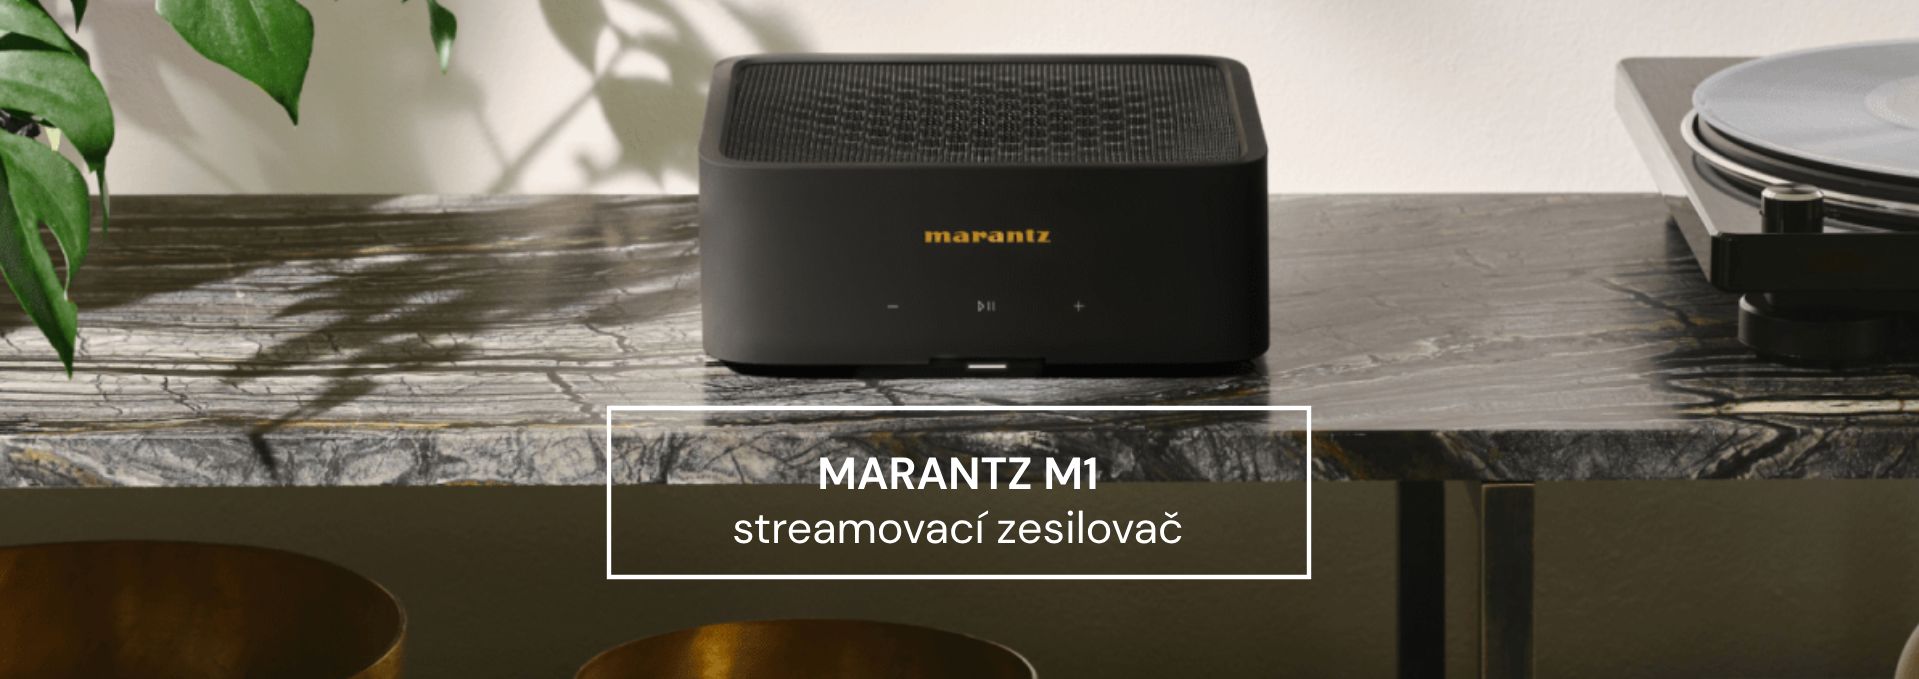 Marantz M1